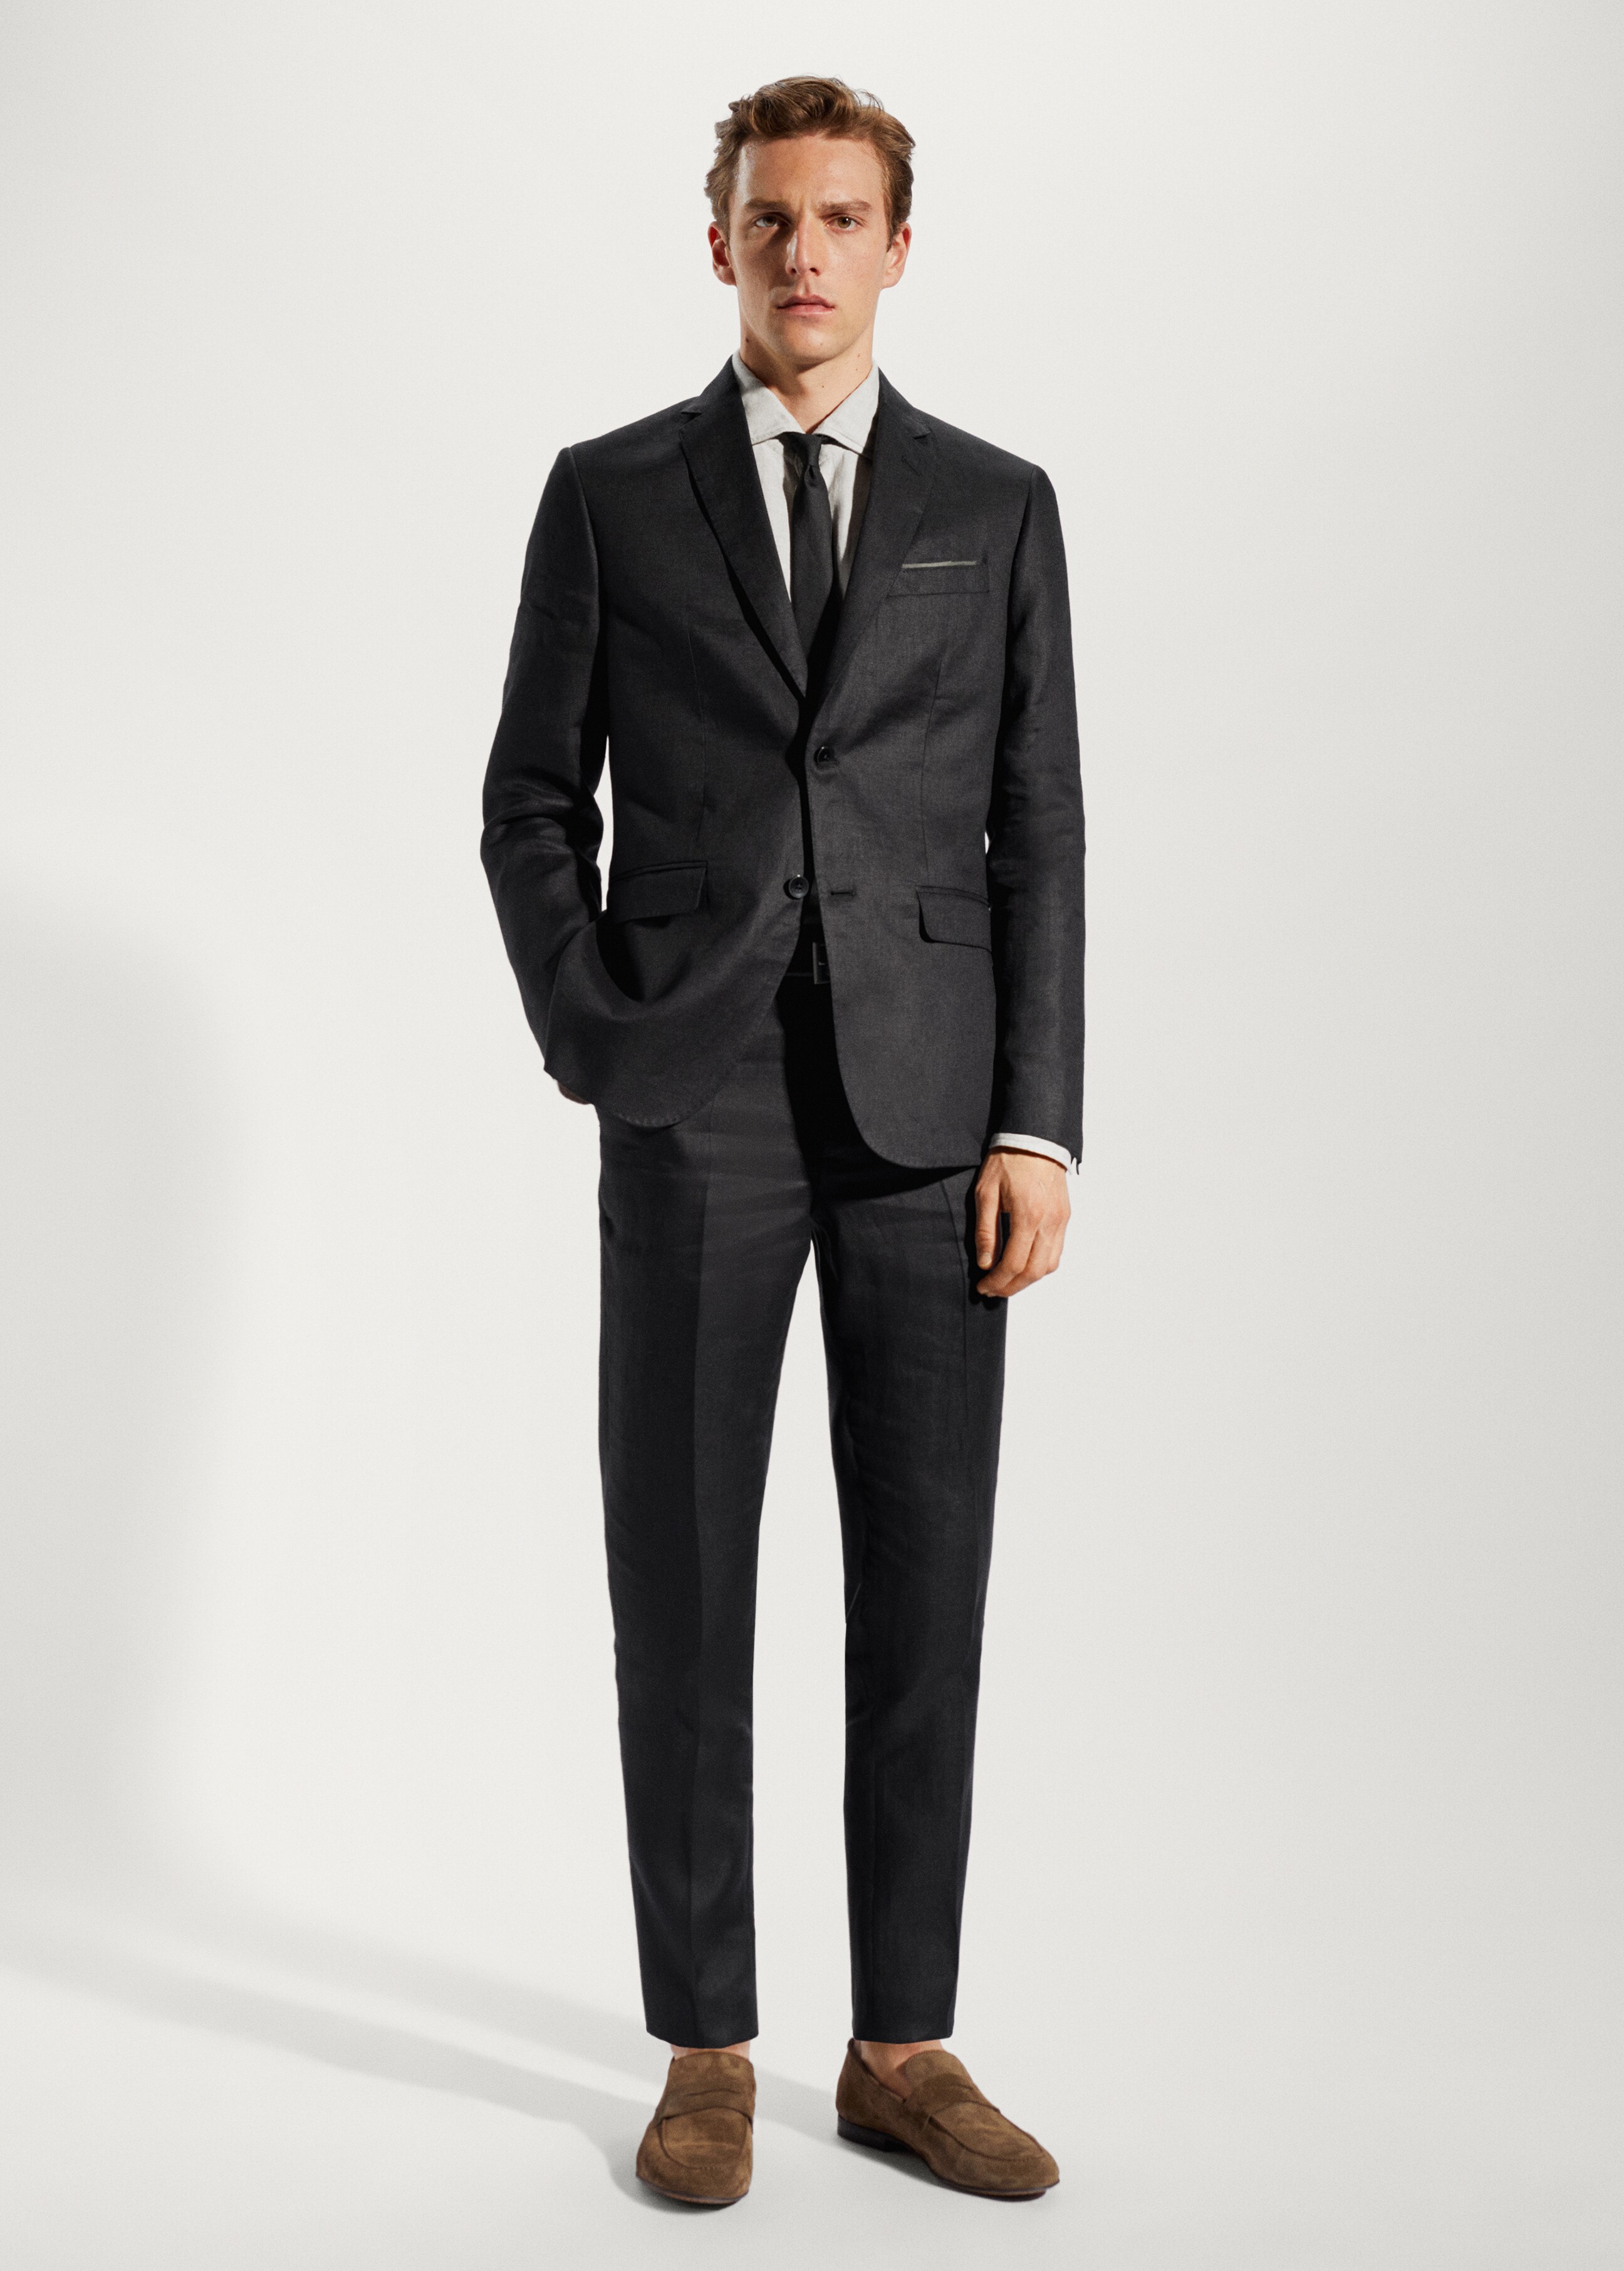 100% linen suit blazer - General plane